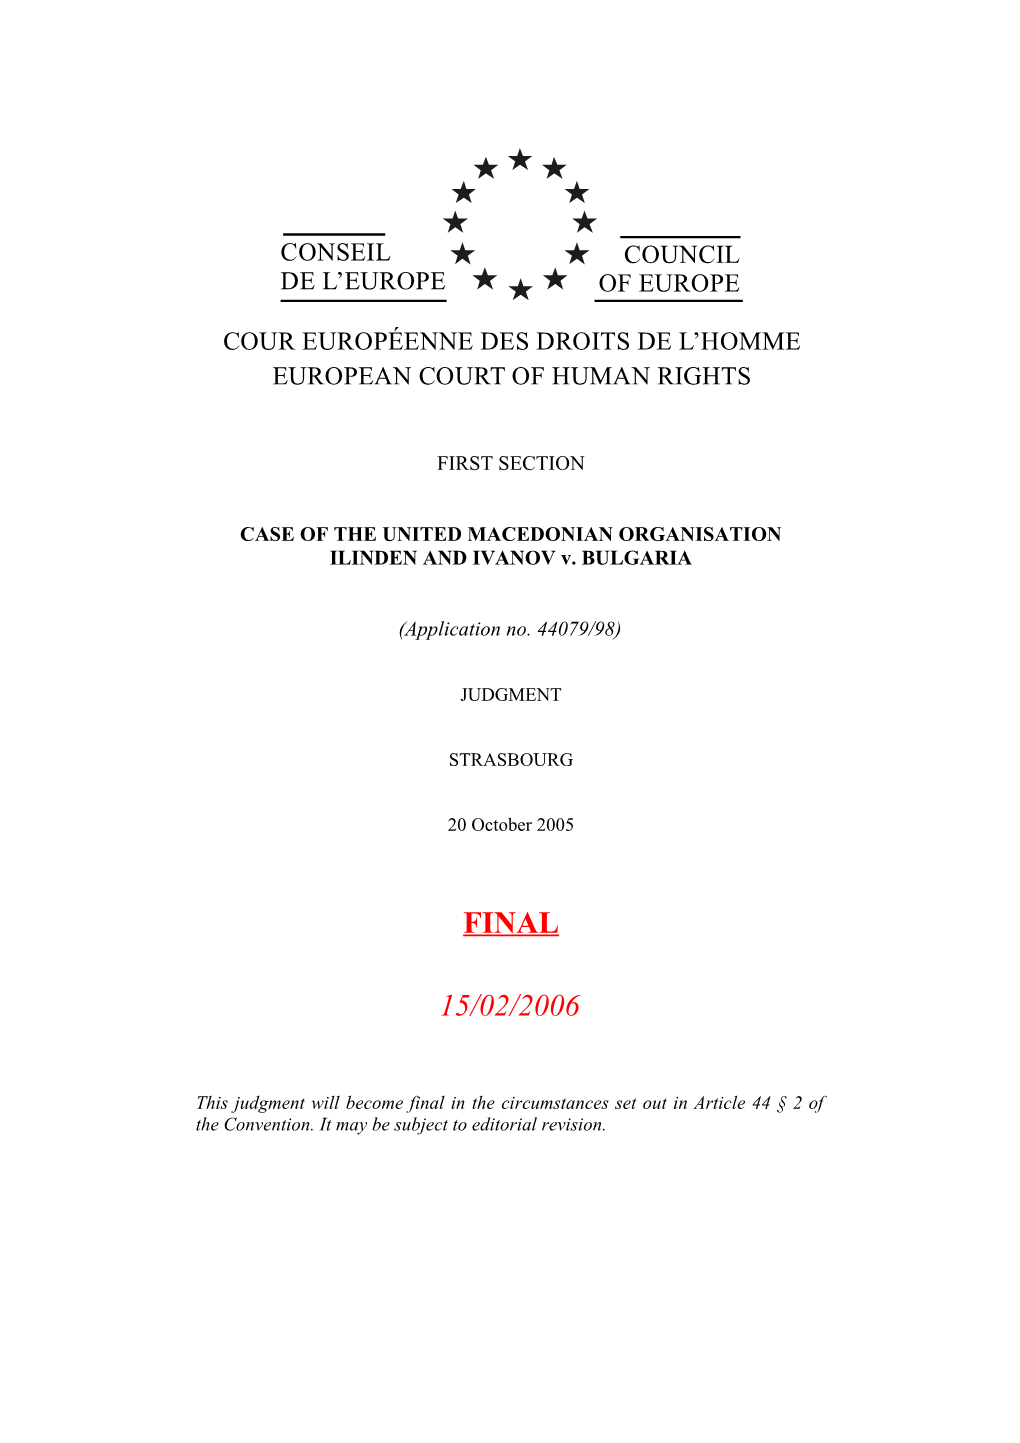 CASE of the UNITED MACEDONIAN ORGANISATION ILINDEN and IVANOV V. BULGARIA